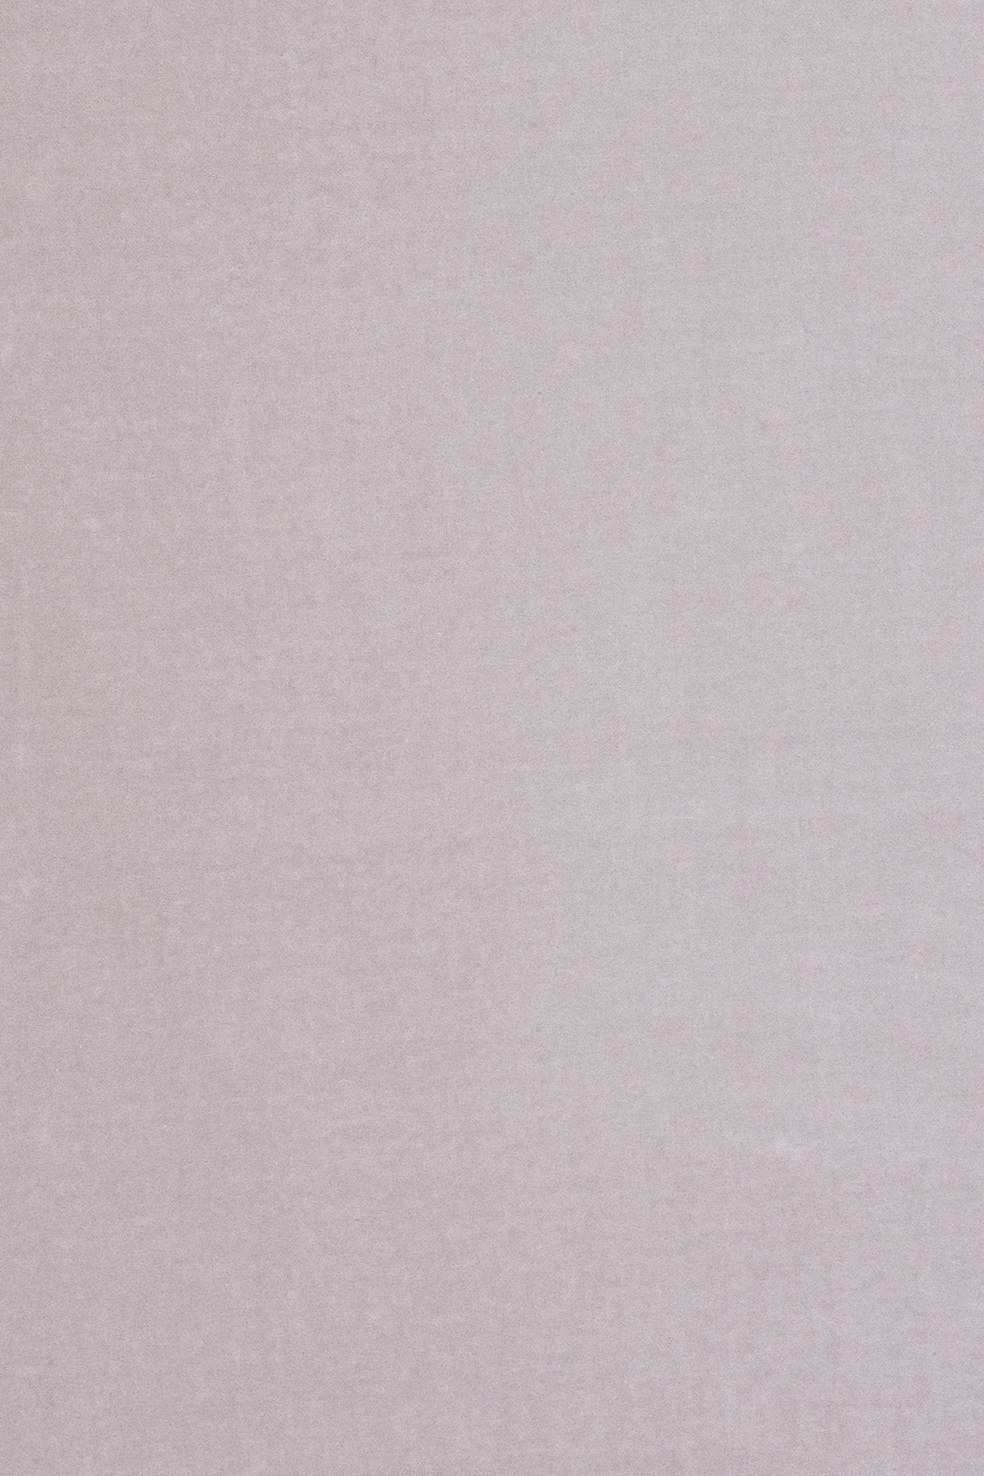 Fabric sample Harald 3 233 grey